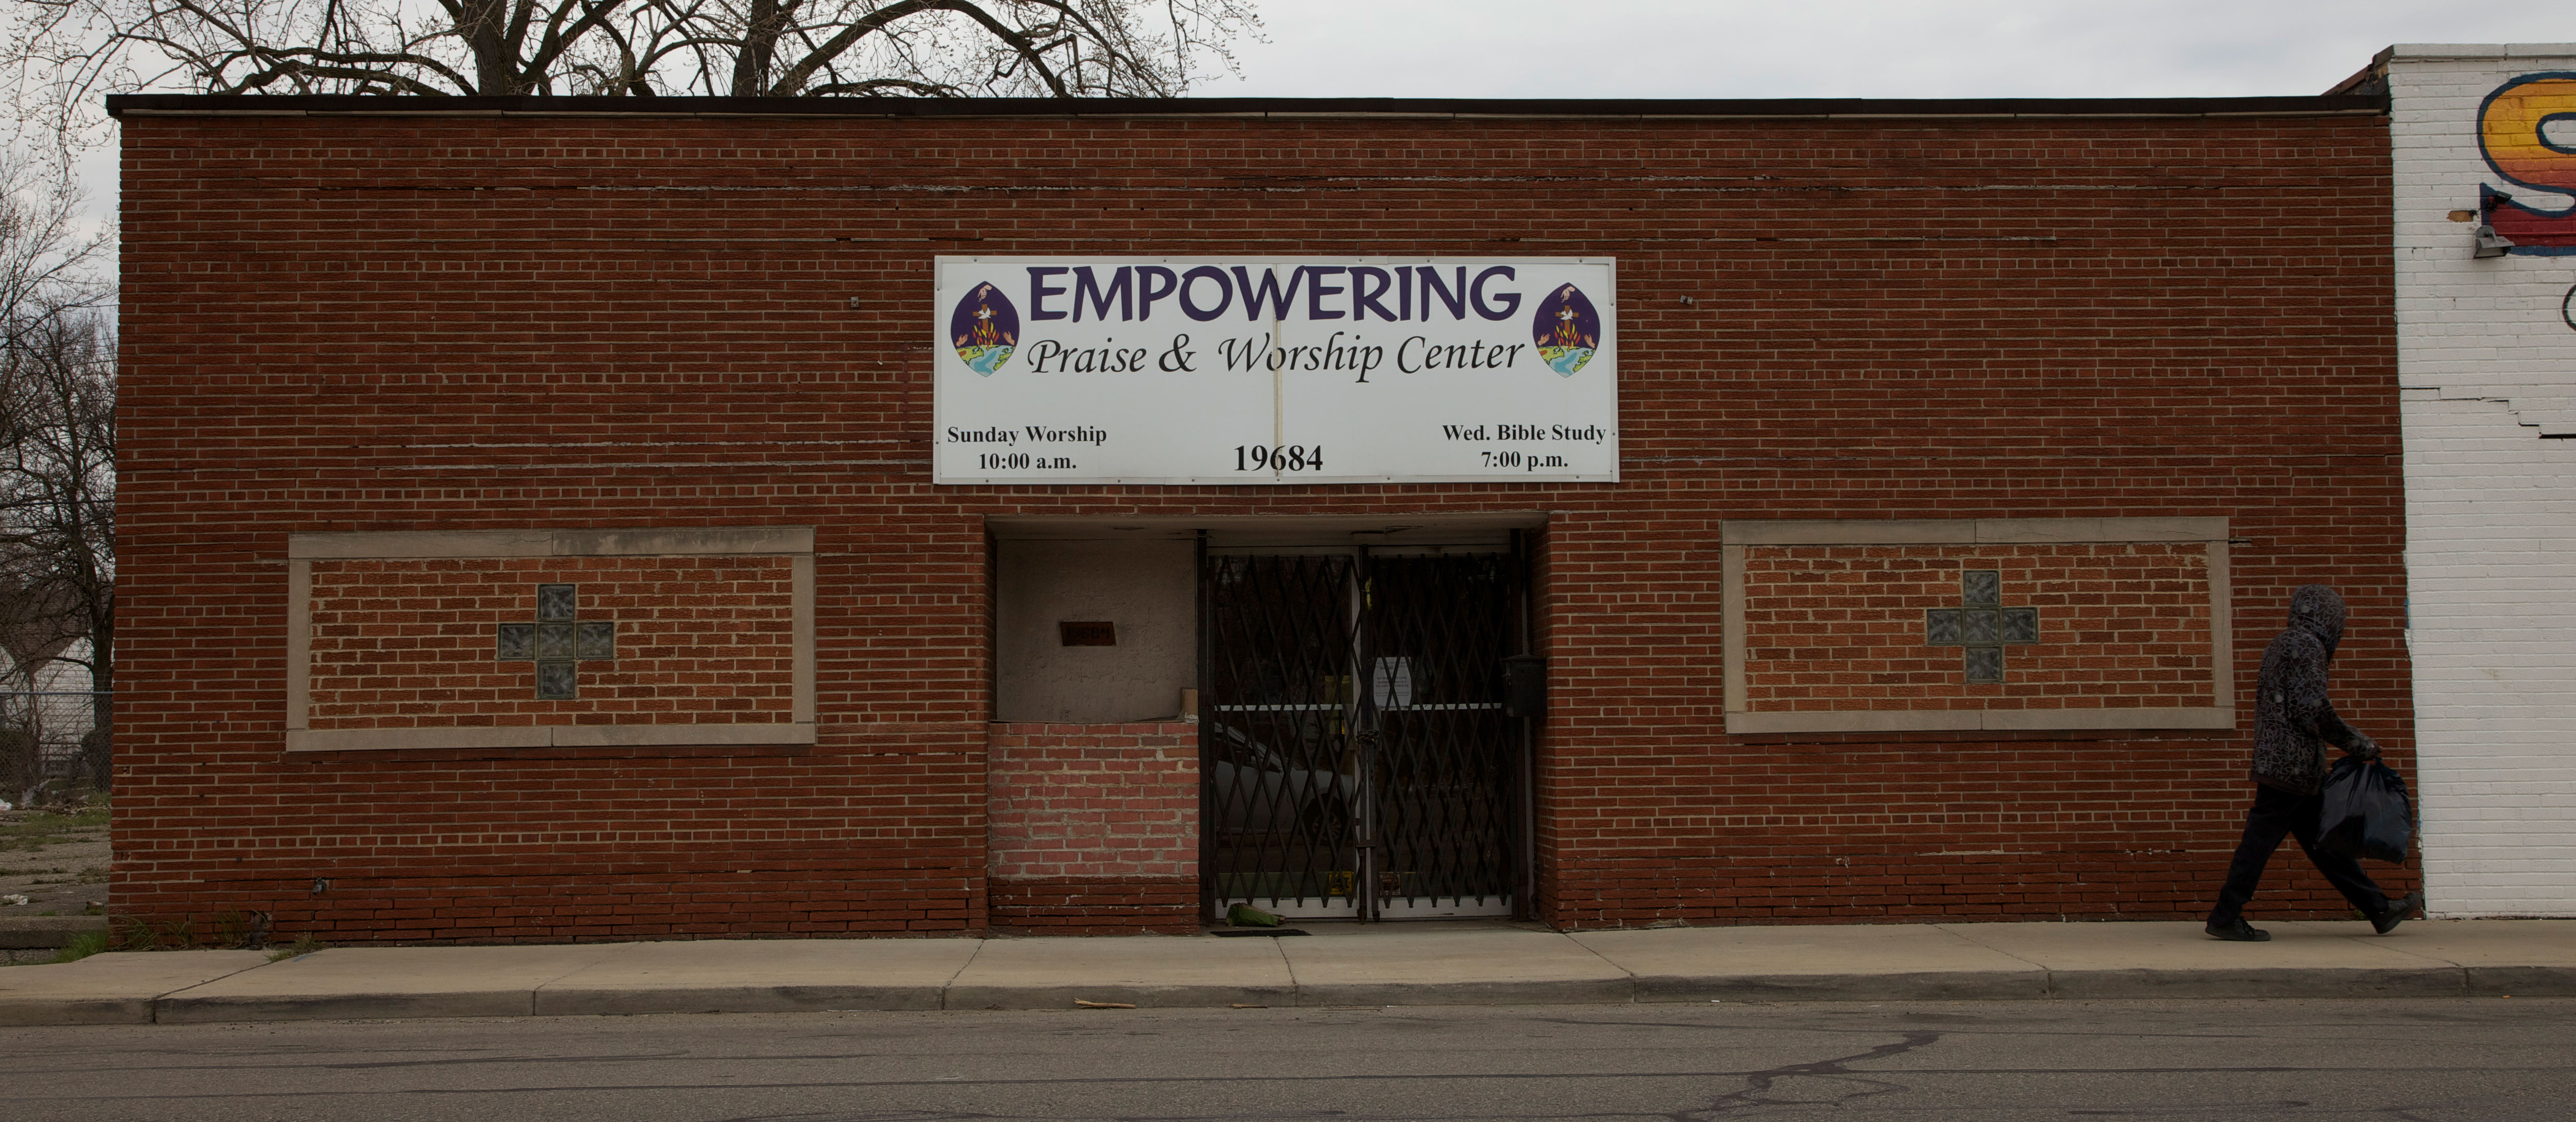 Empowering Praise and Worship Center